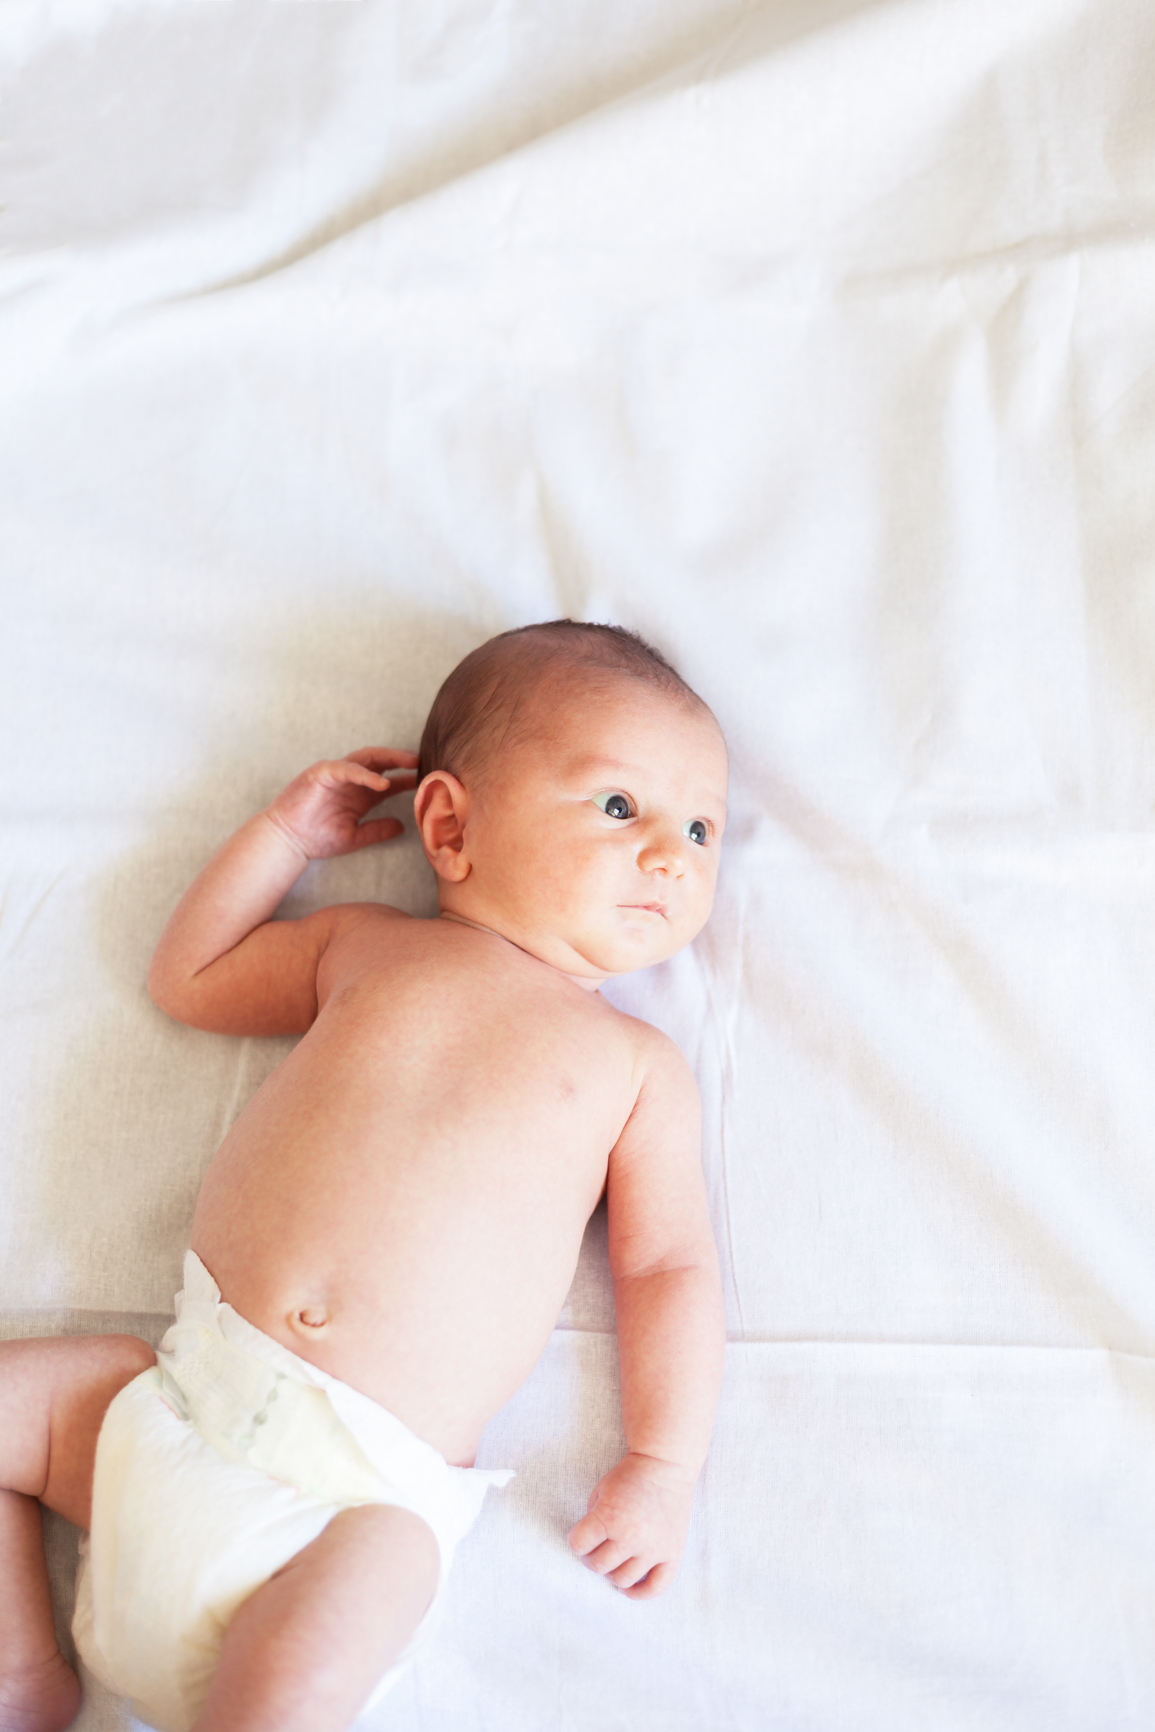 Séance naissance | Justine Maquart Photographe